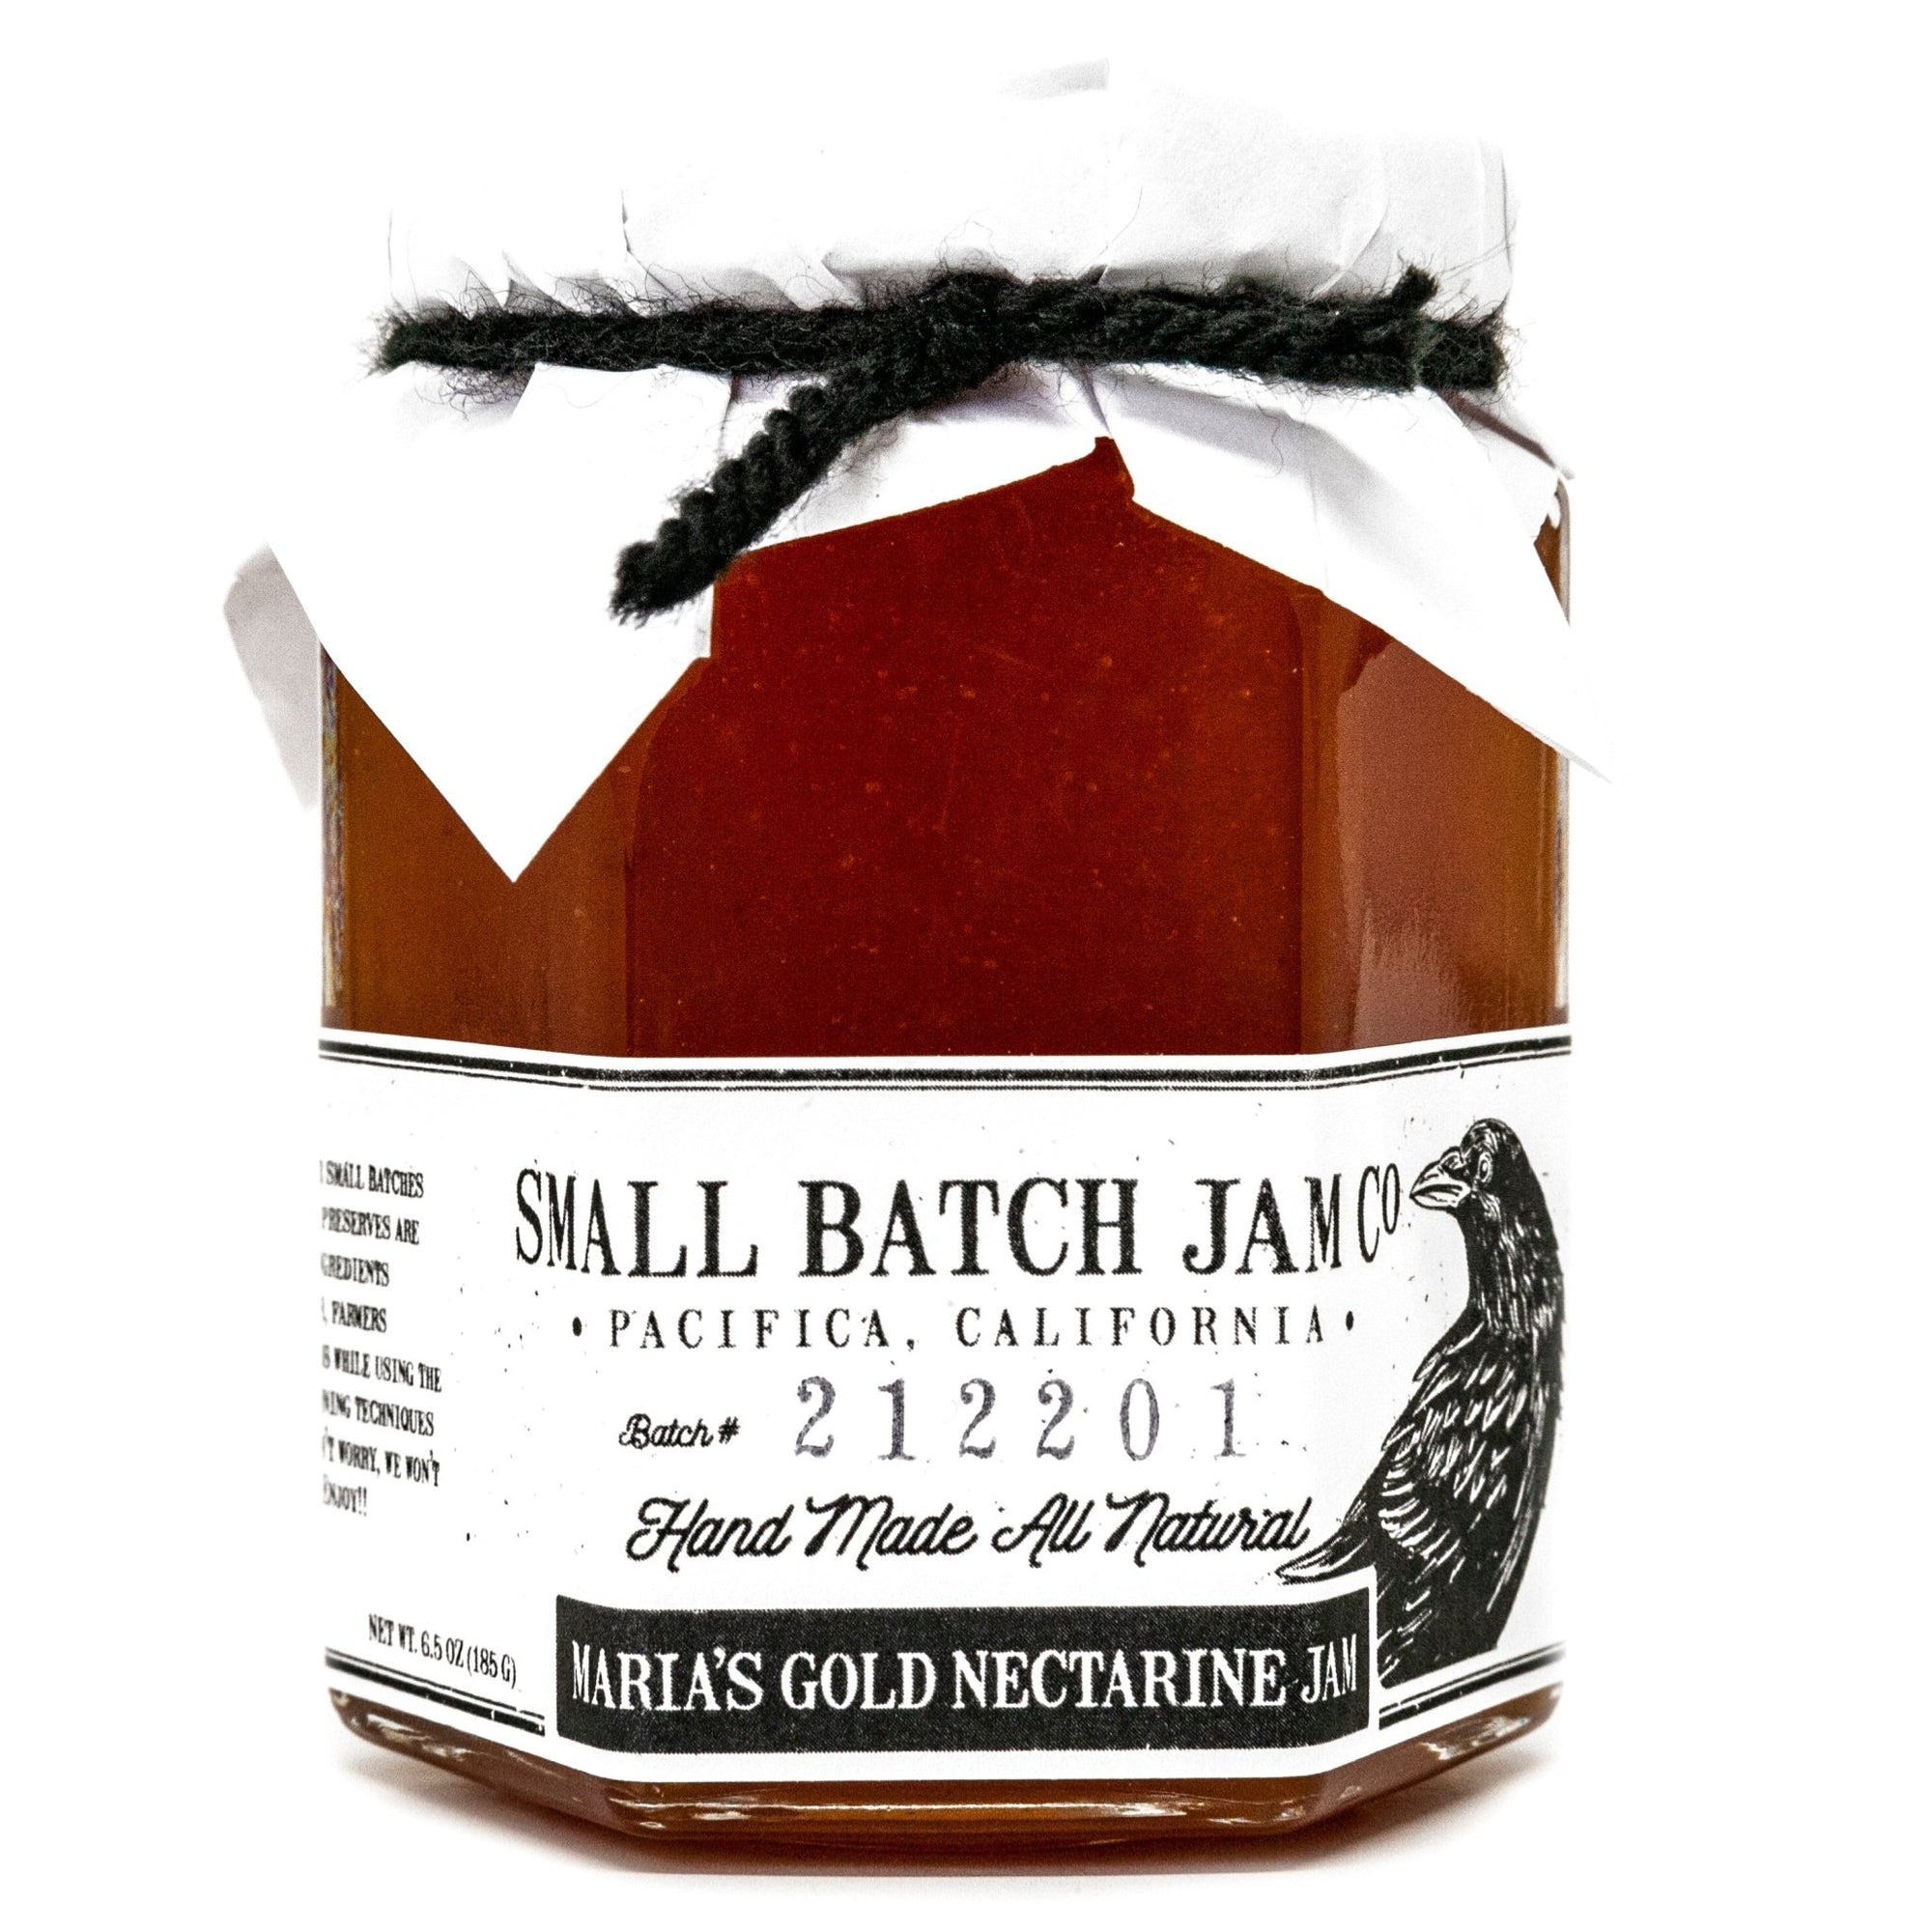 Maria's Gold Nectarine Jam - Small Batch Jam Co